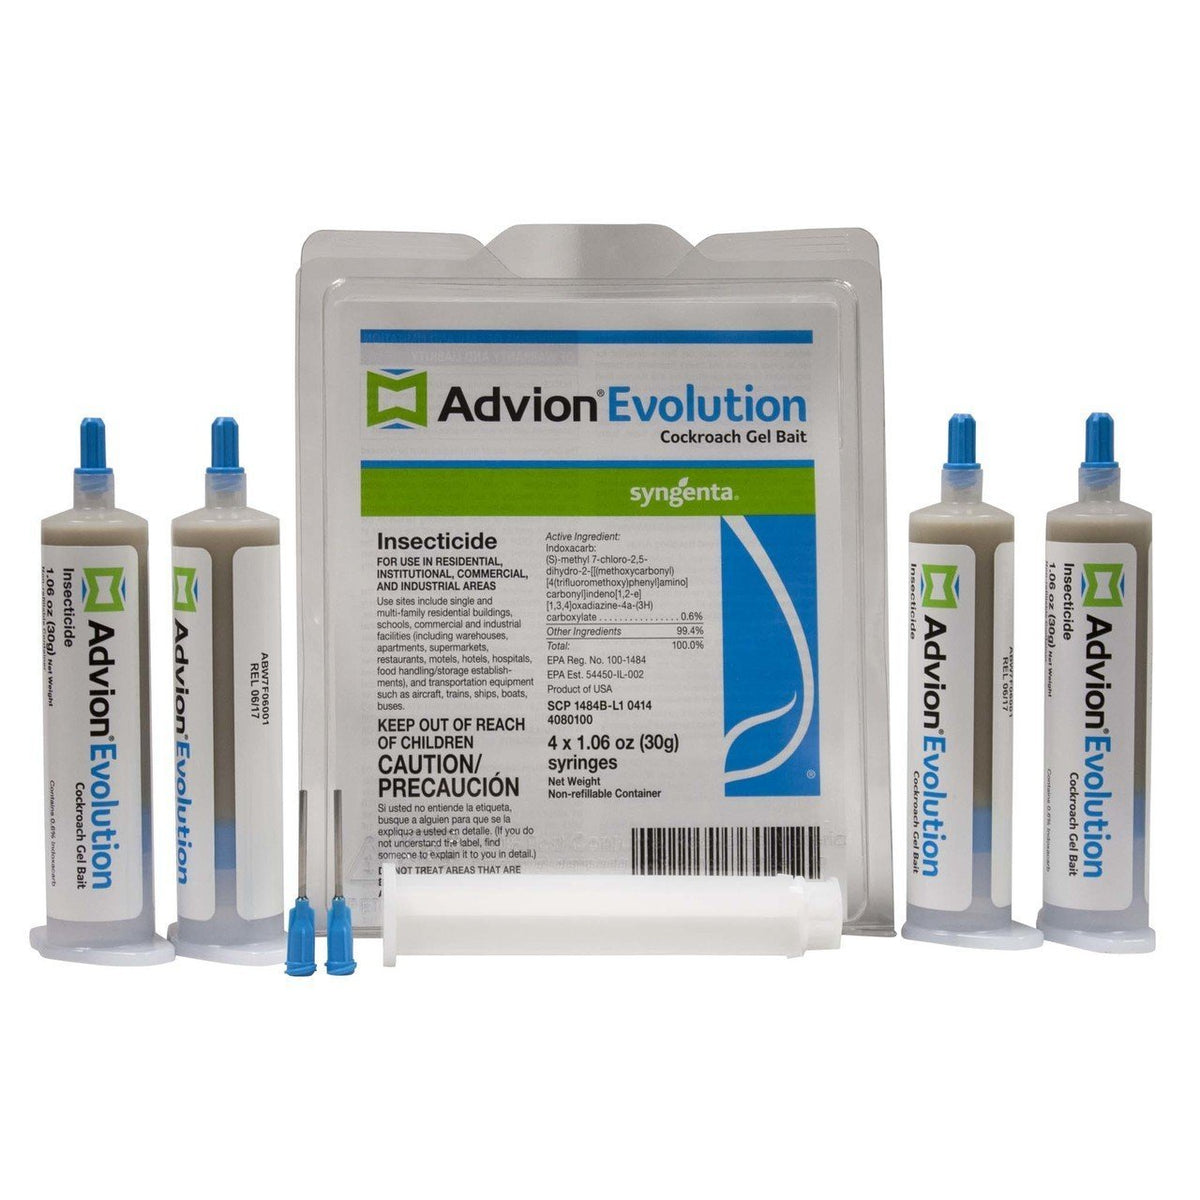 Advion Evolution Cockroach Gel Bait Insecticide - 4 tubes